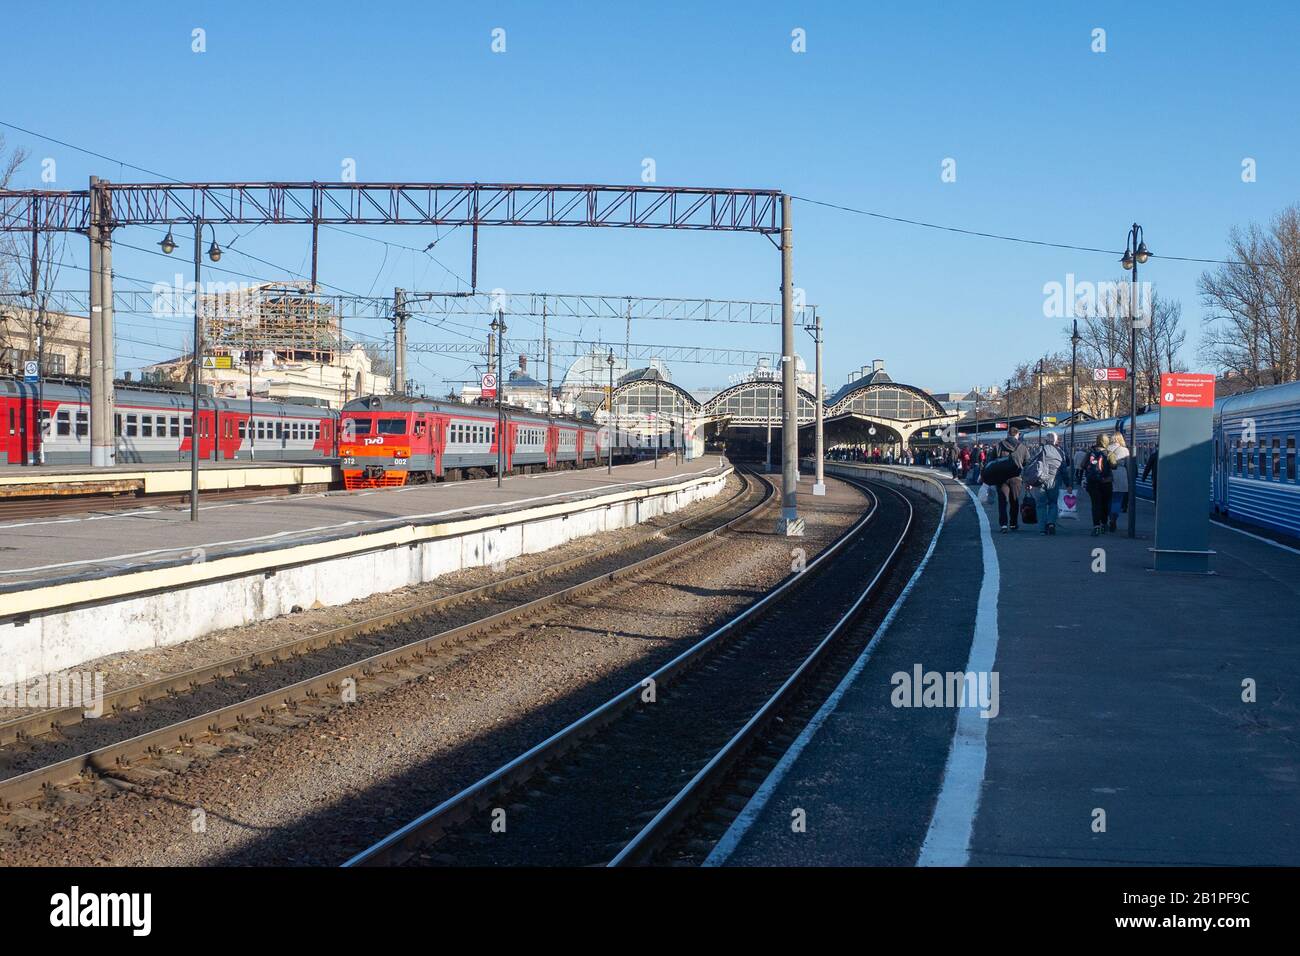 April 29, 2018 Saint Petersburg, Russia. Passengers walk on the platform of the Vitebsk railway station Stock Photo